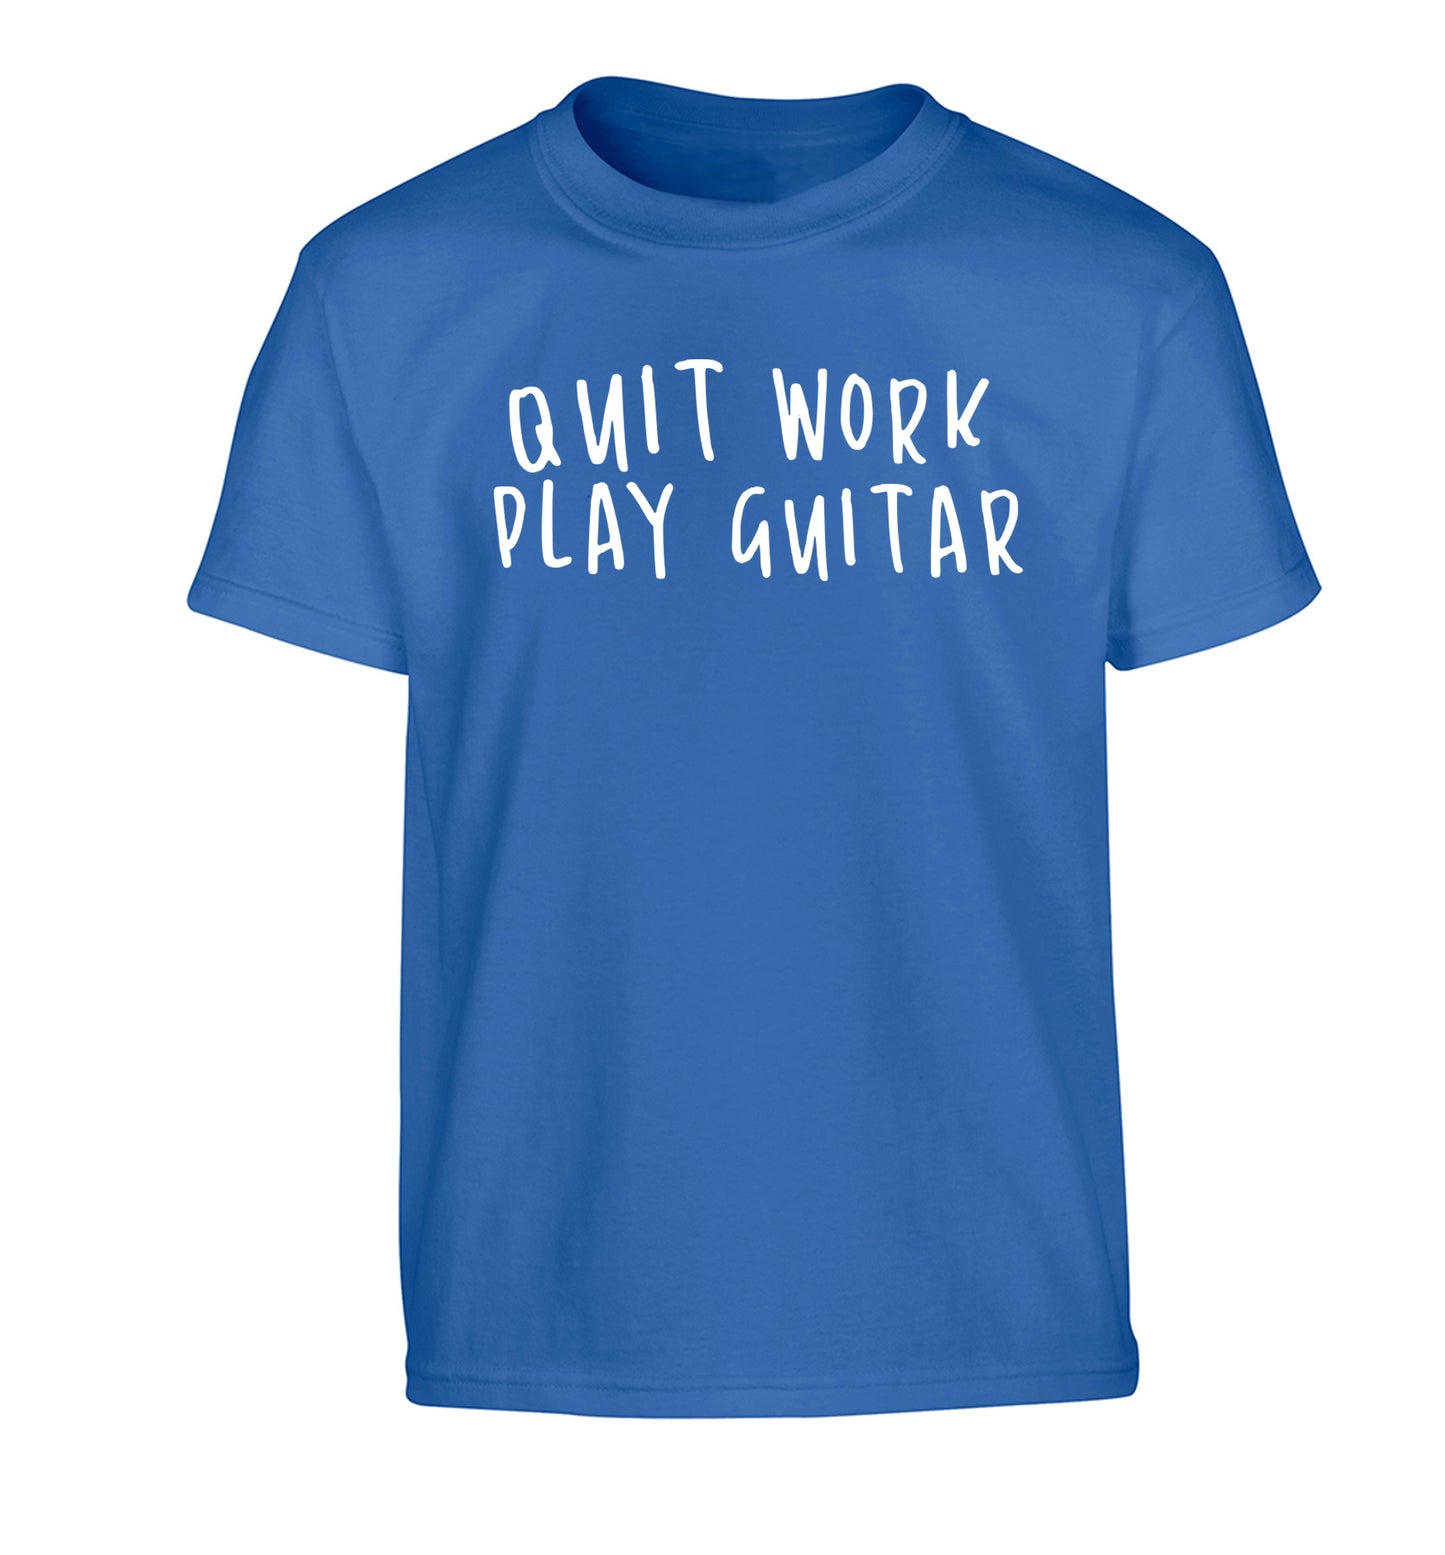 Quit work play guitar Children's blue Tshirt 12-14 Years